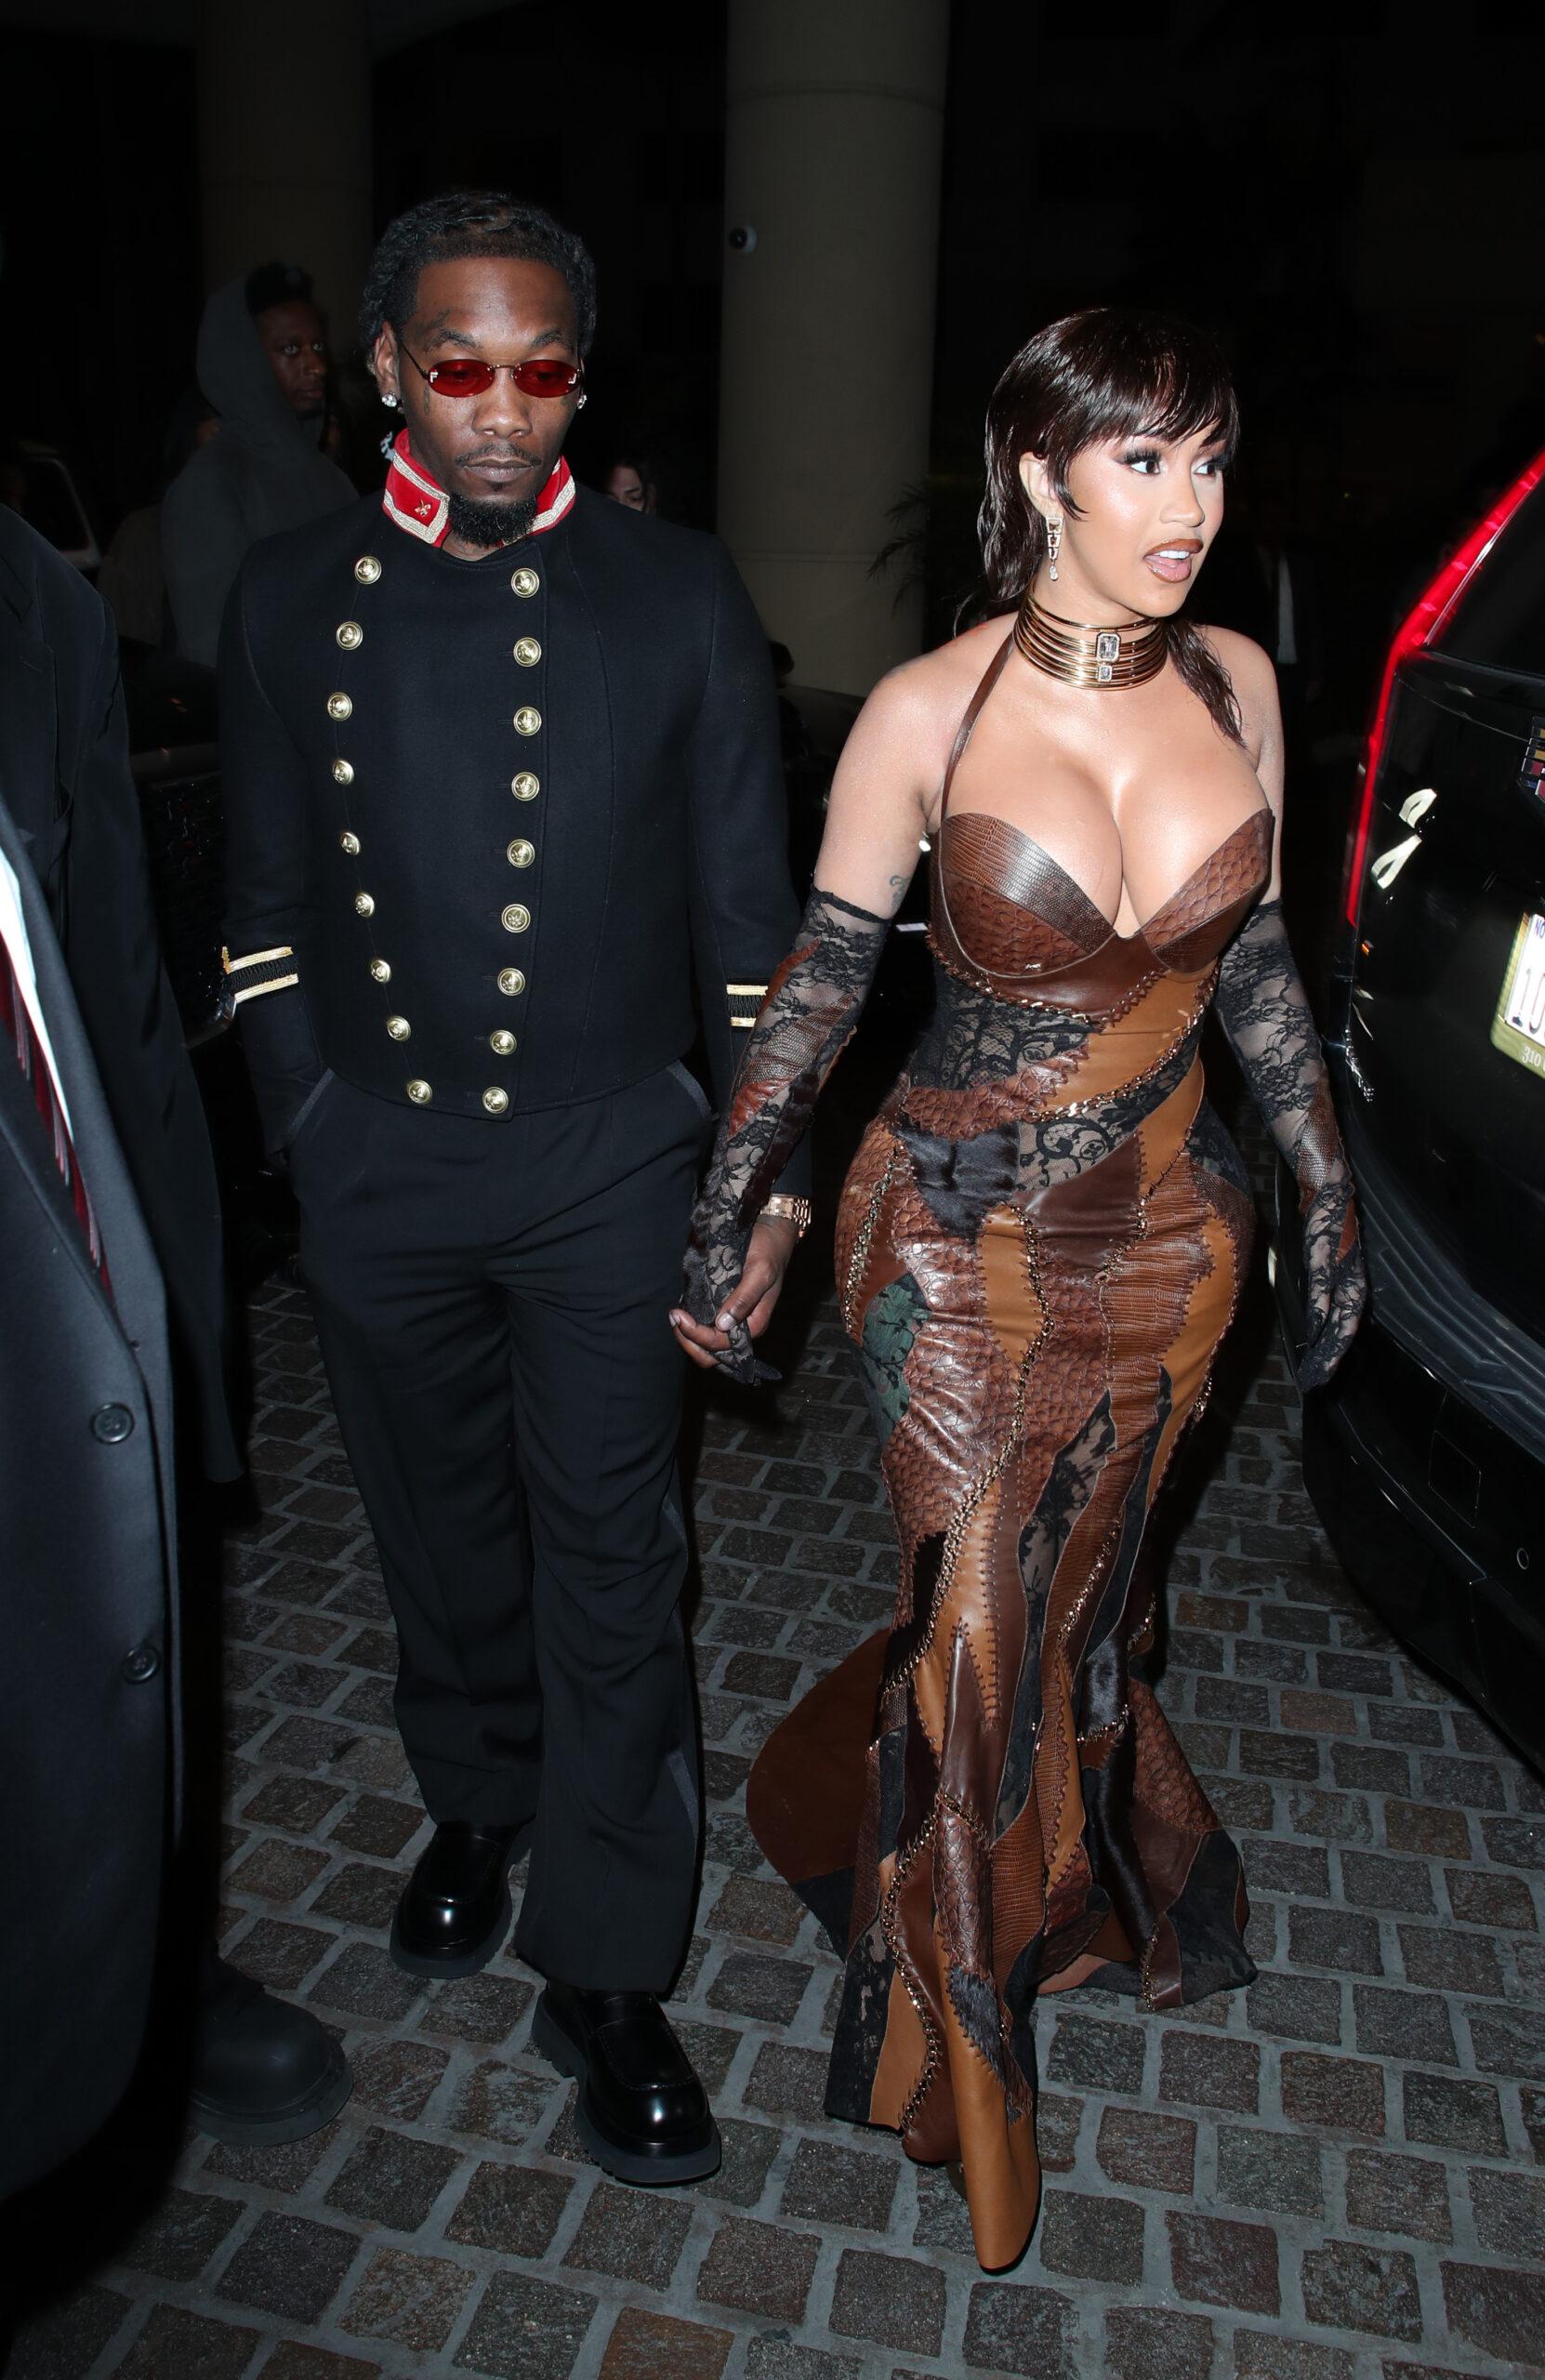 Celebrities arrive at the pre-GRAMMY gala in LA